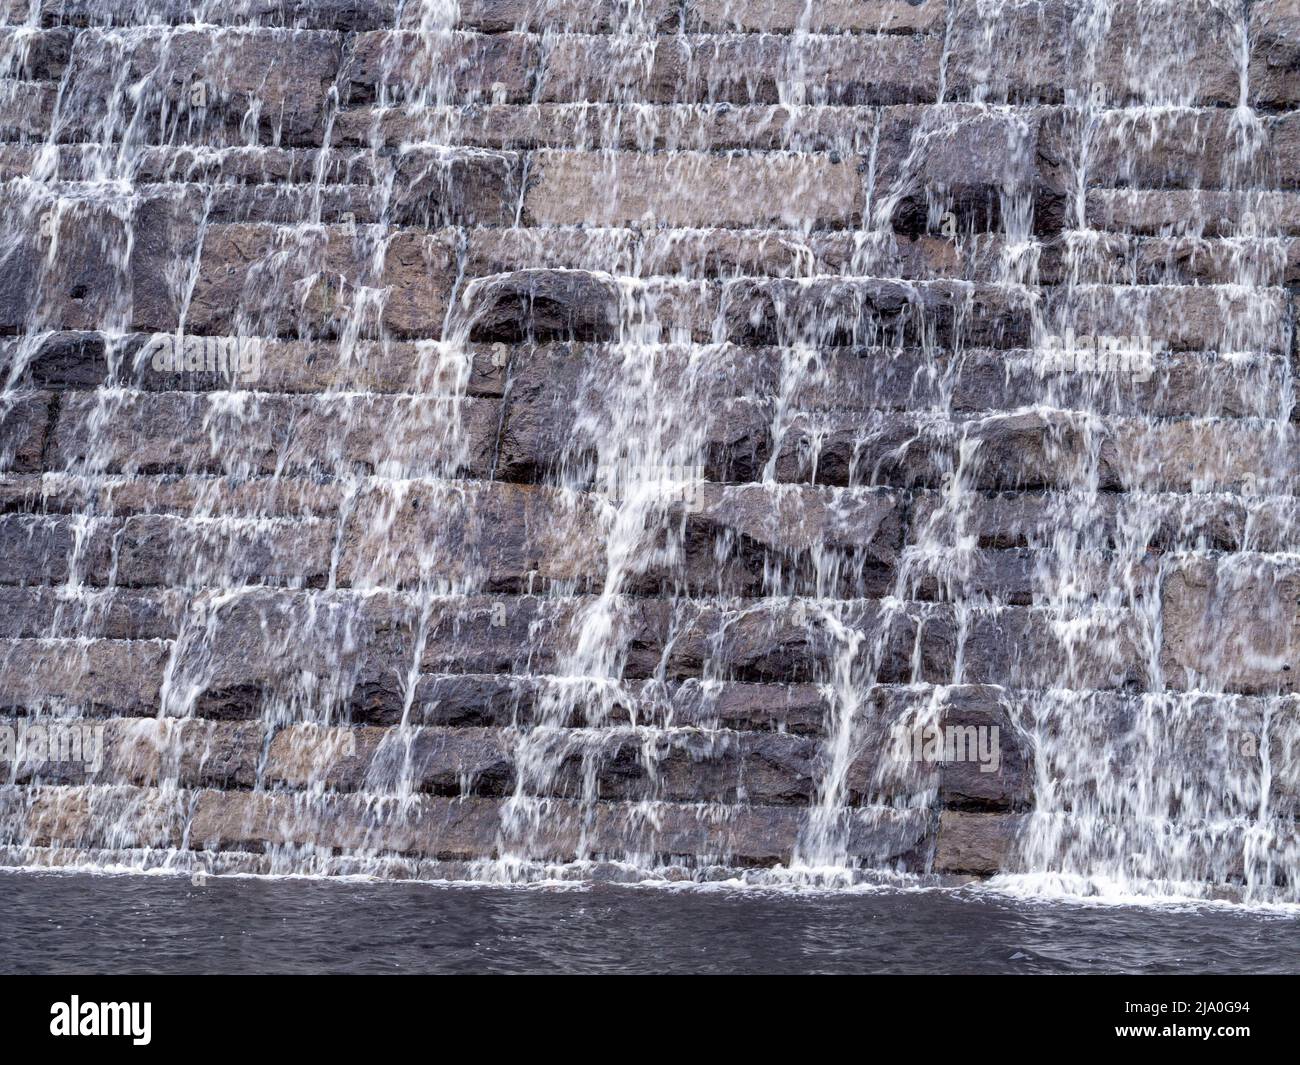 Derwent dam overflowing the retaining wall. Stock Photo